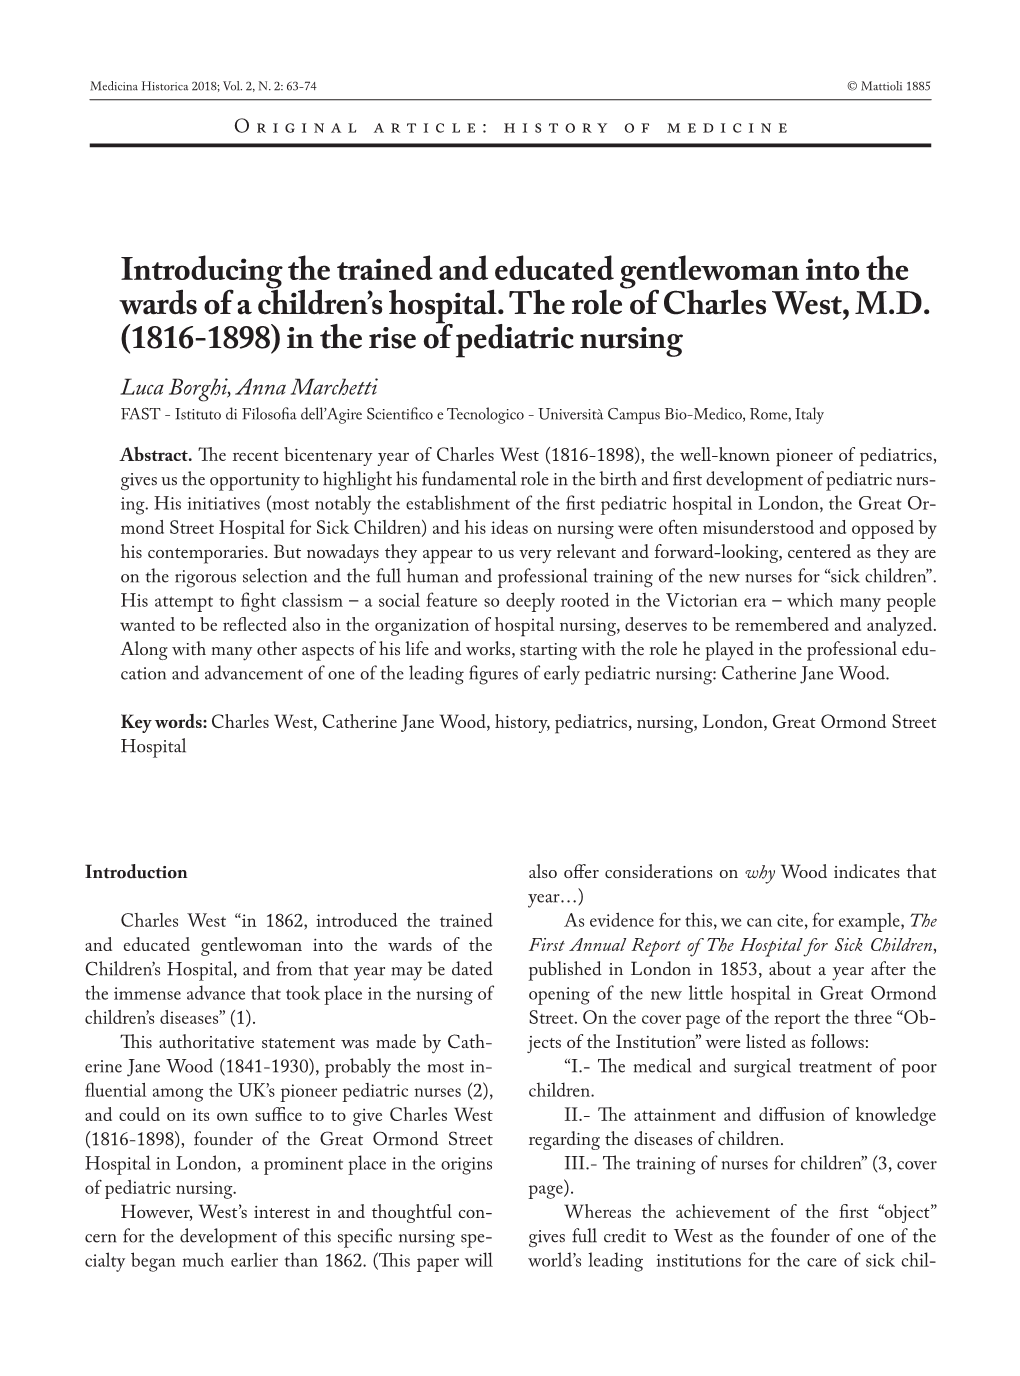 (1816-1898) in the Rise of Pediatric Nursing